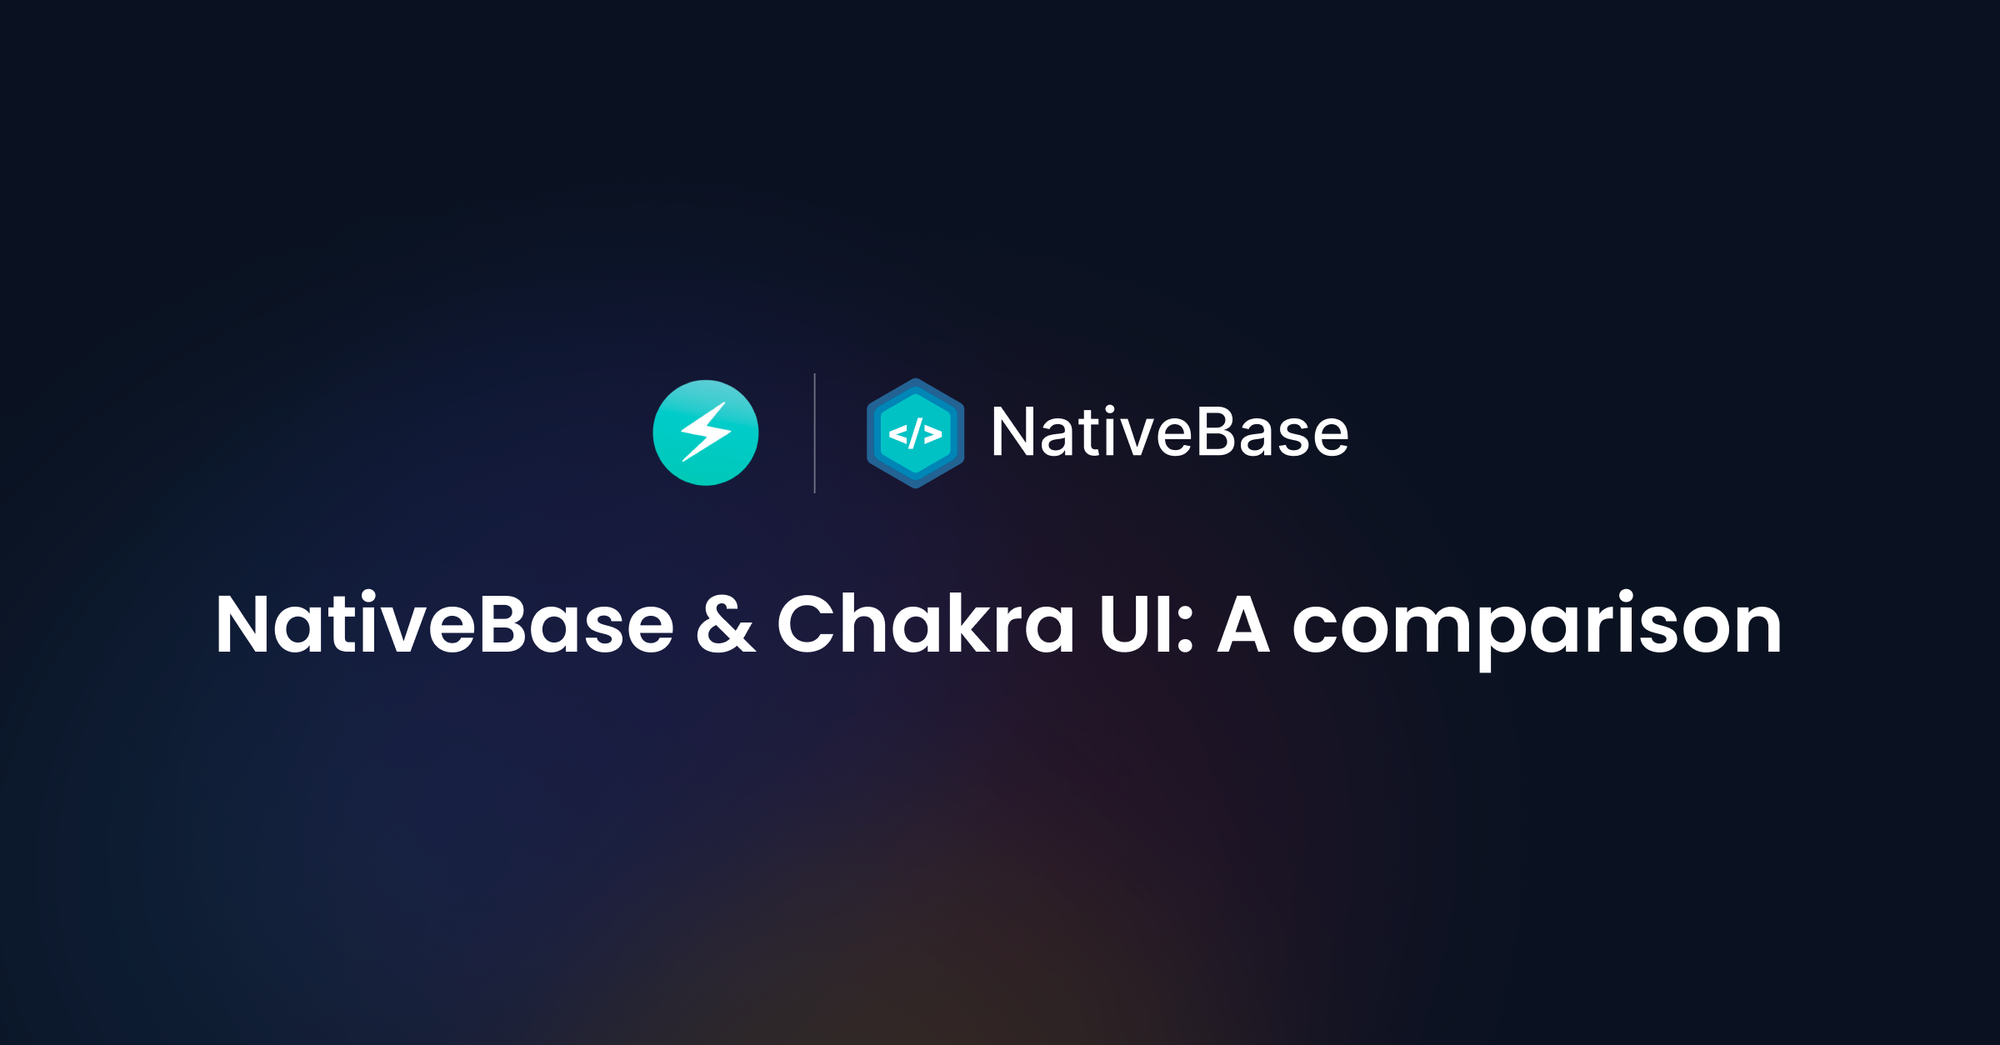 NativeBase Vs Chakra UI: A comparison